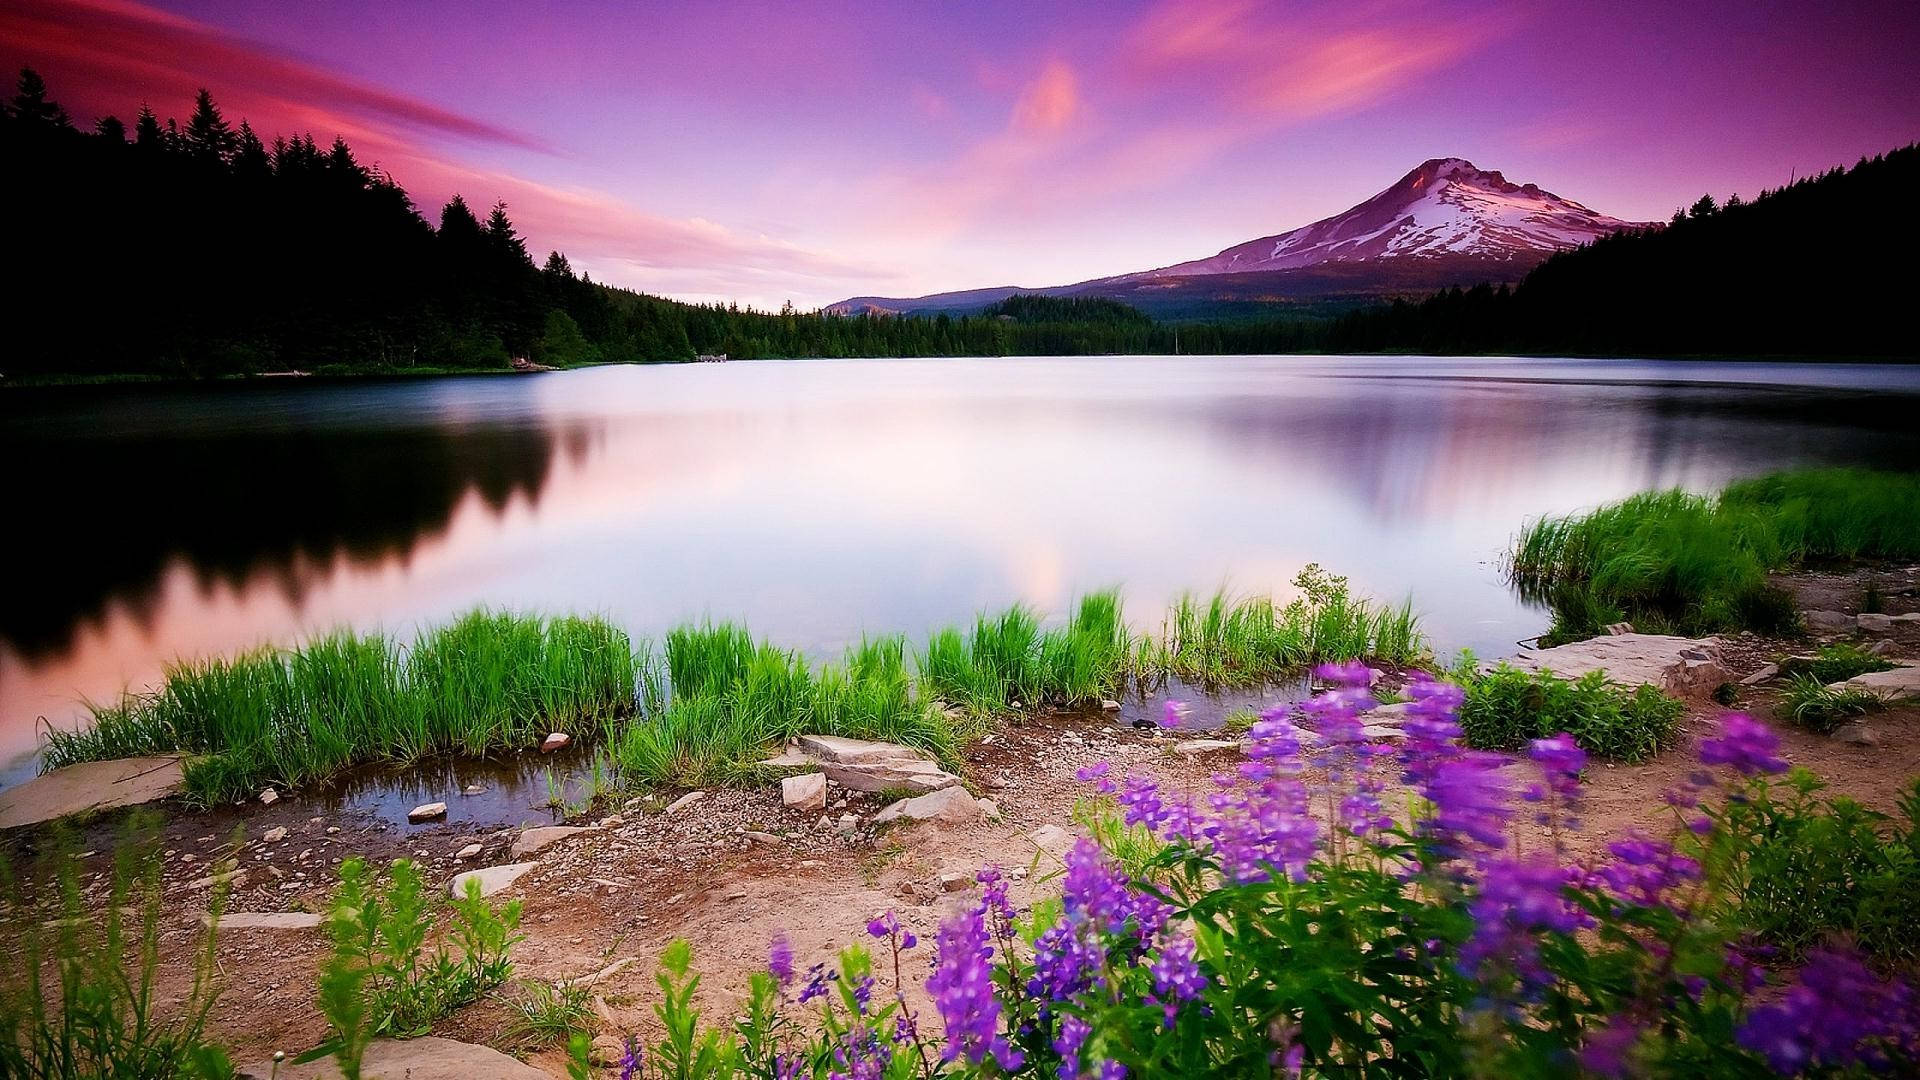 Download Hd Landscape Purple Sky Over The River Wallpaper 